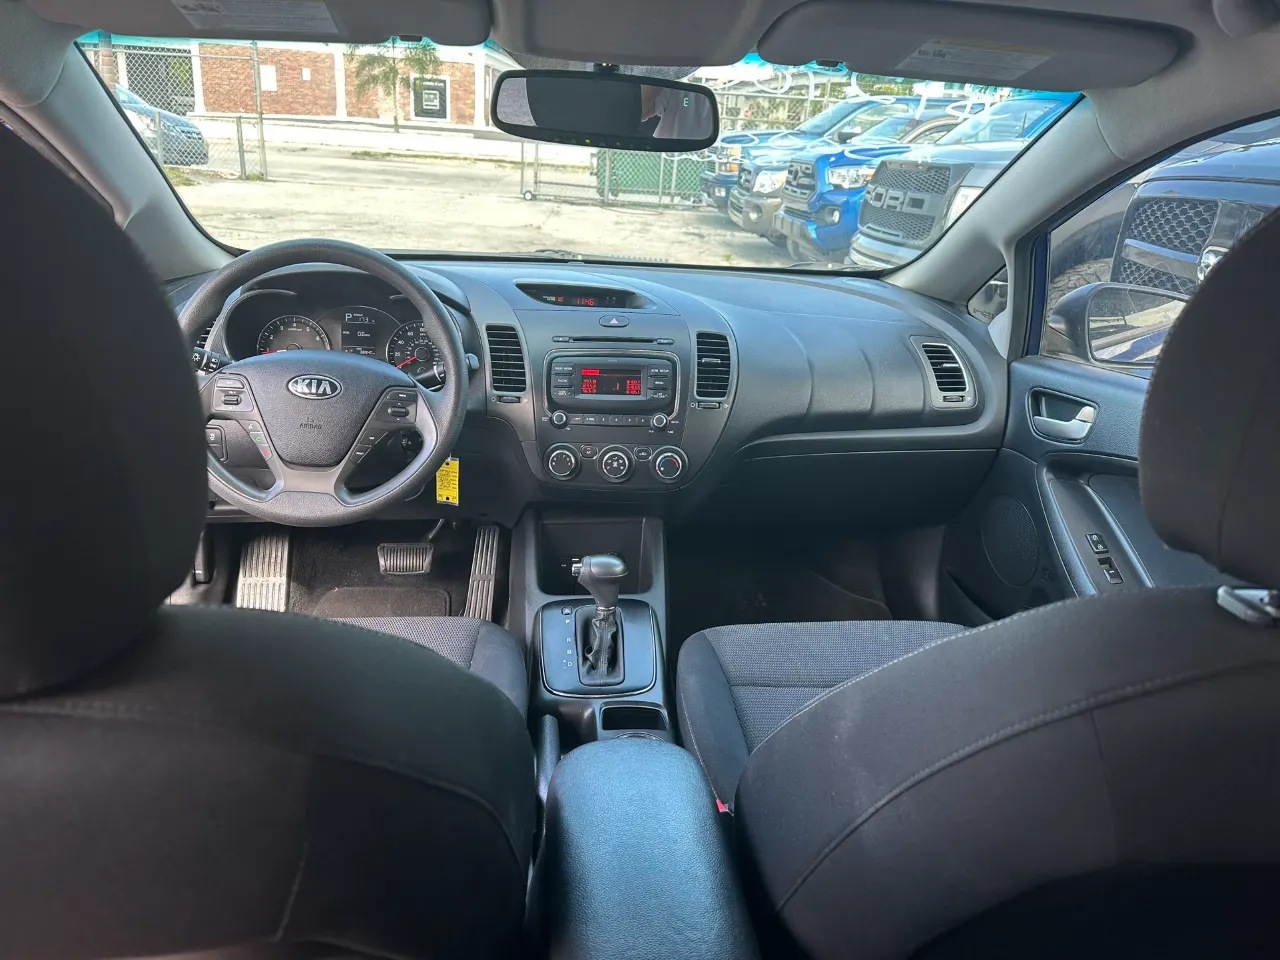 used 2017 Kia Forte - interior view 1